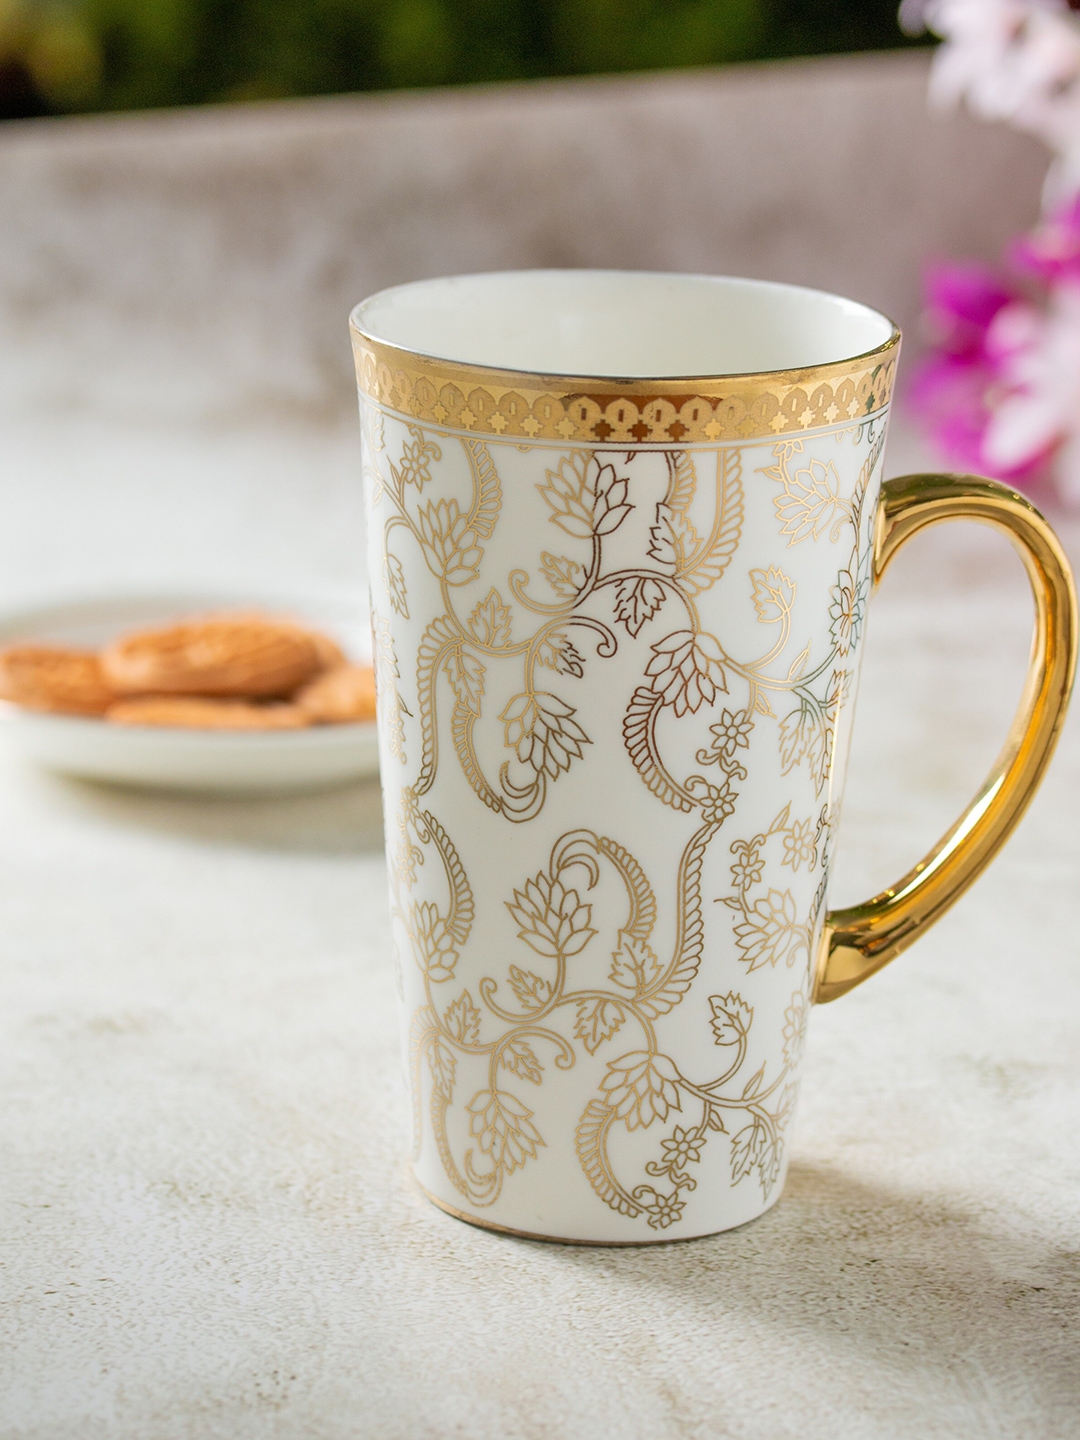 Market99 350Ml Dream Big Mug - Coffee / Milk Mug